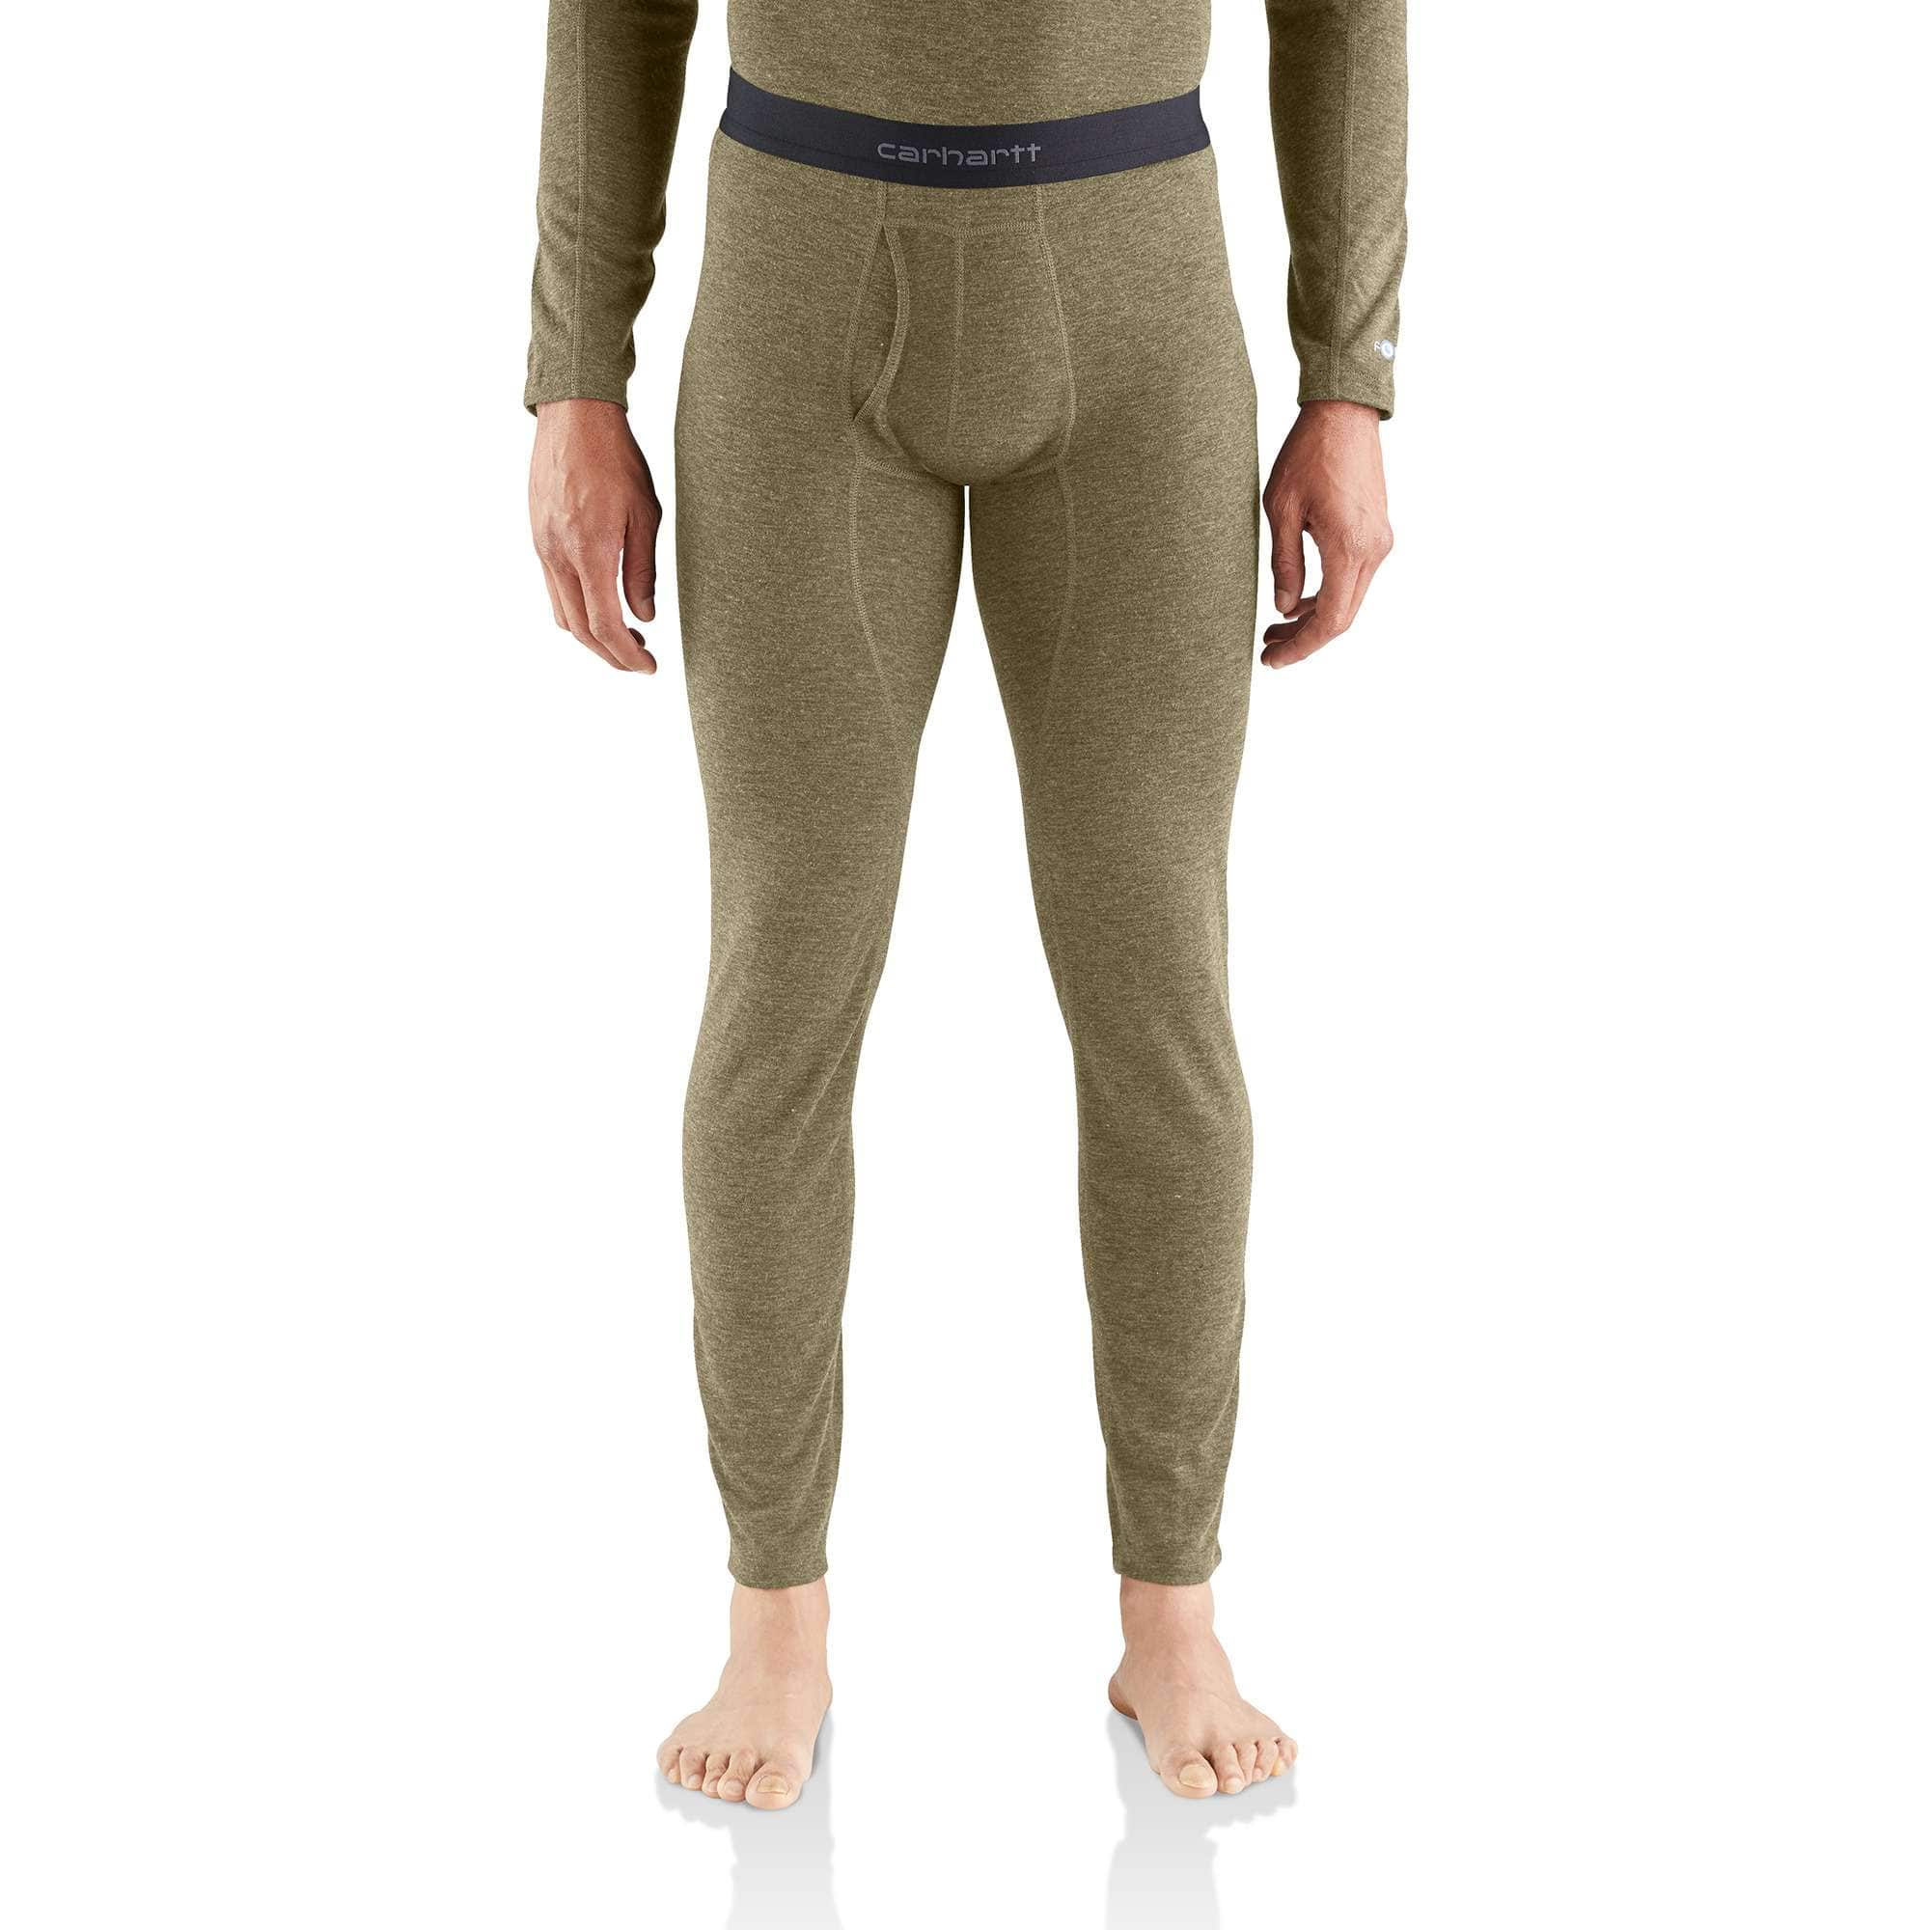 Extreme Cold Weather Long John Underwear W/ Zipper Collar - Super